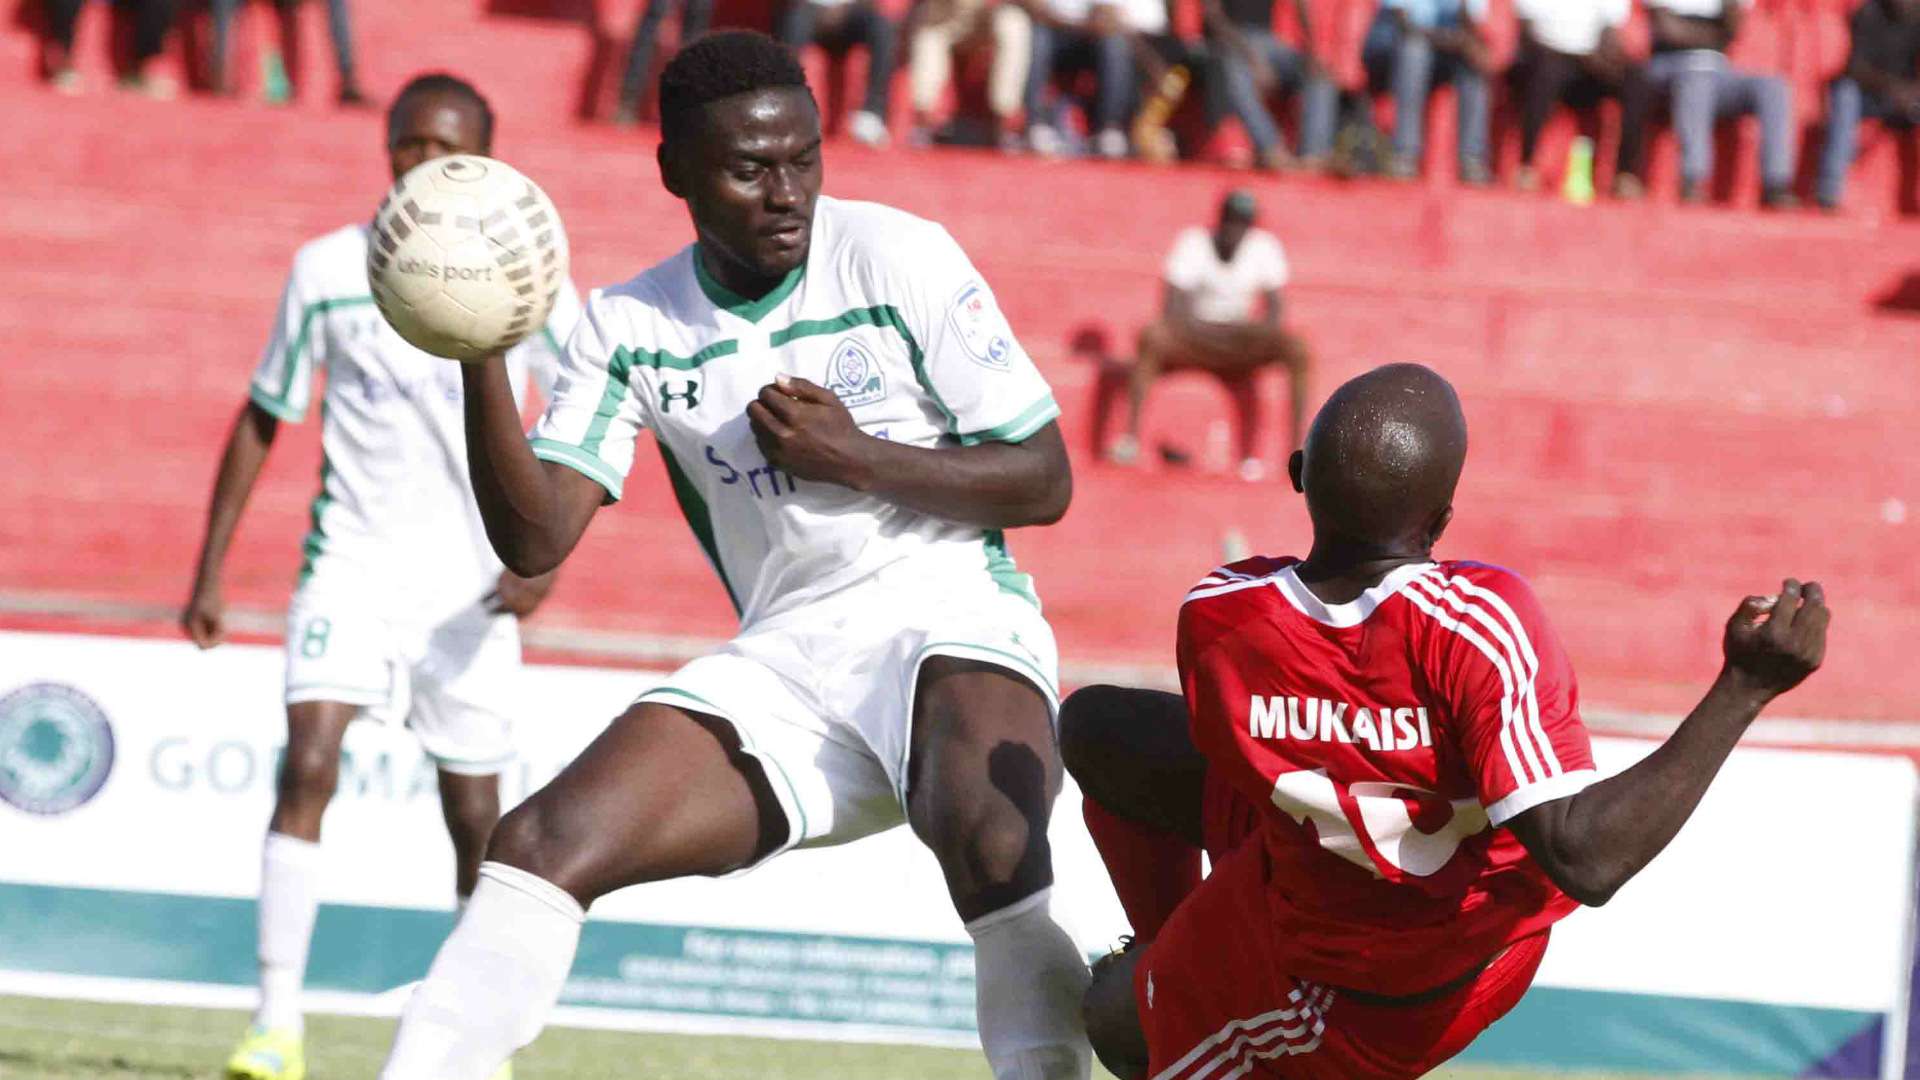 Dennis Mukaisi tackle Musa Mohammed.